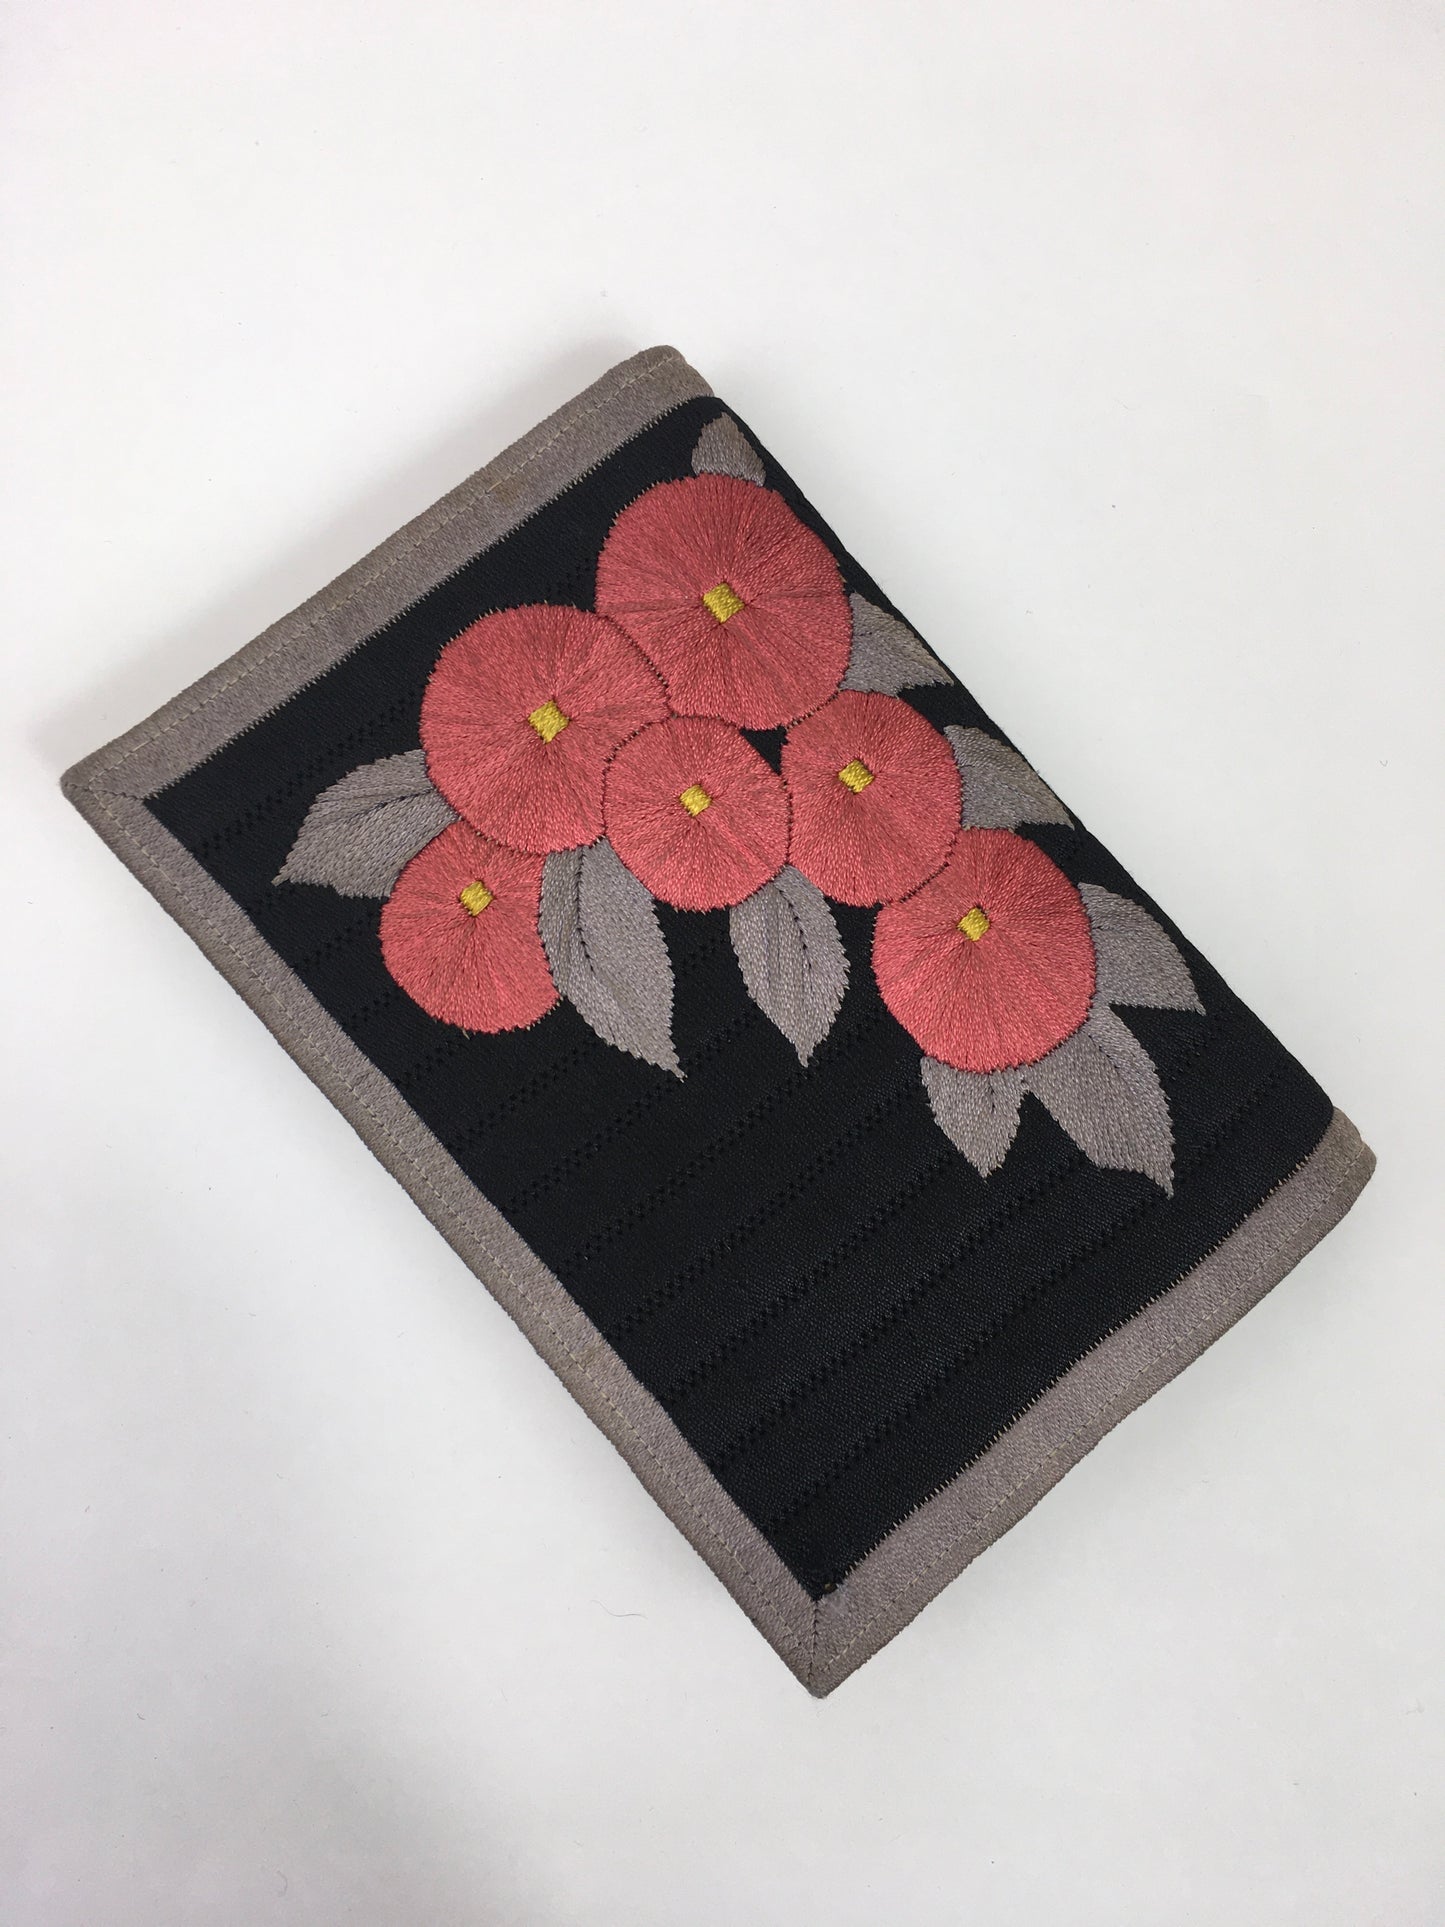 Original 1930's SENSATIONAL Art Deco Clutch Bag - In Embroidered Floral